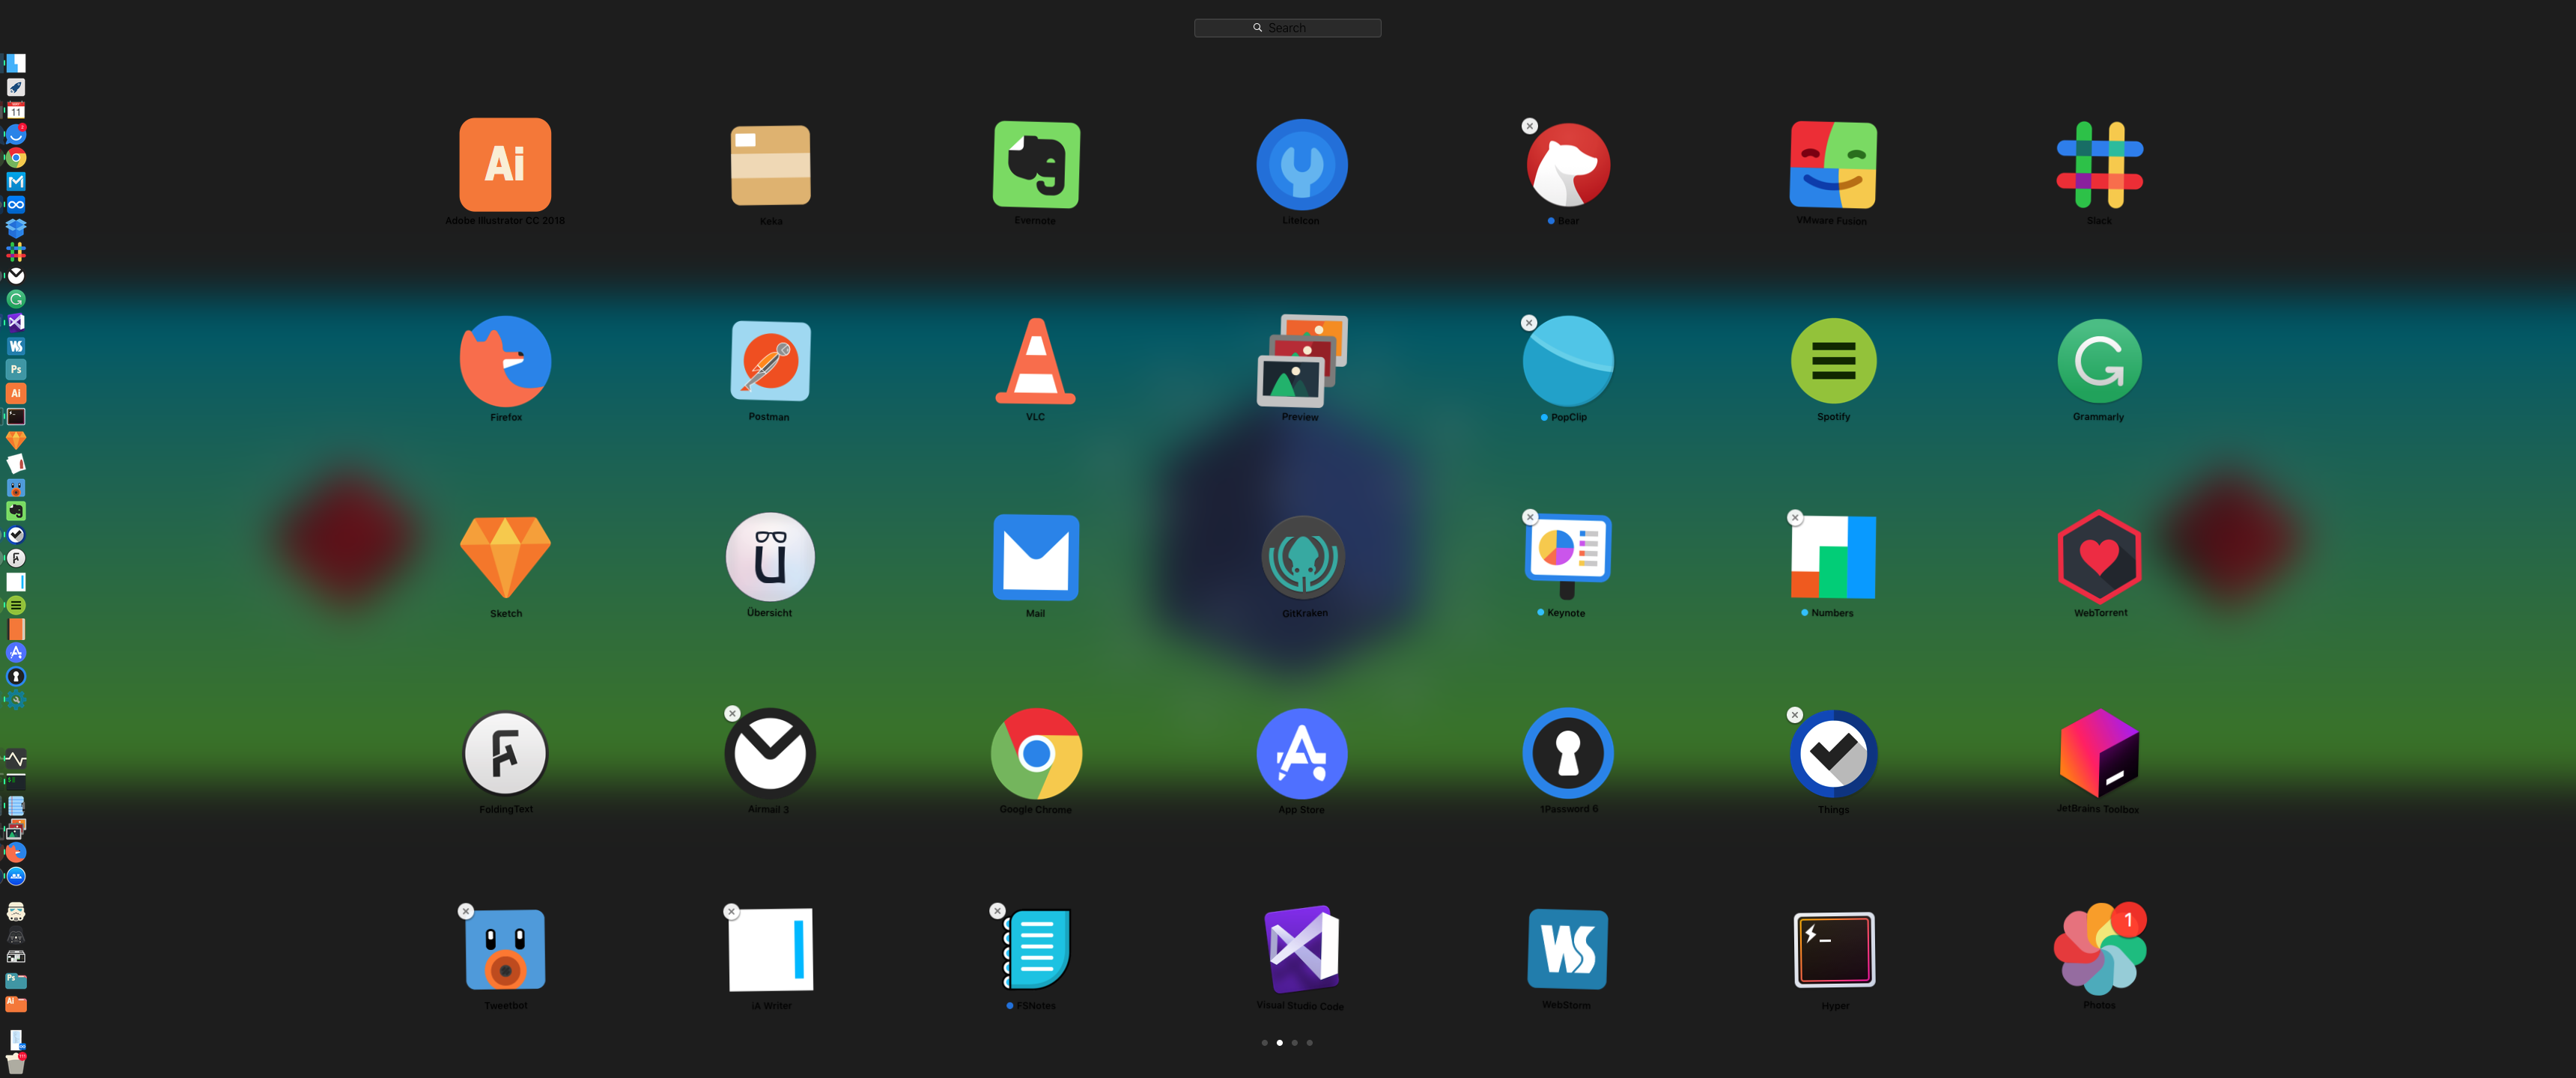 app icon generator for ios